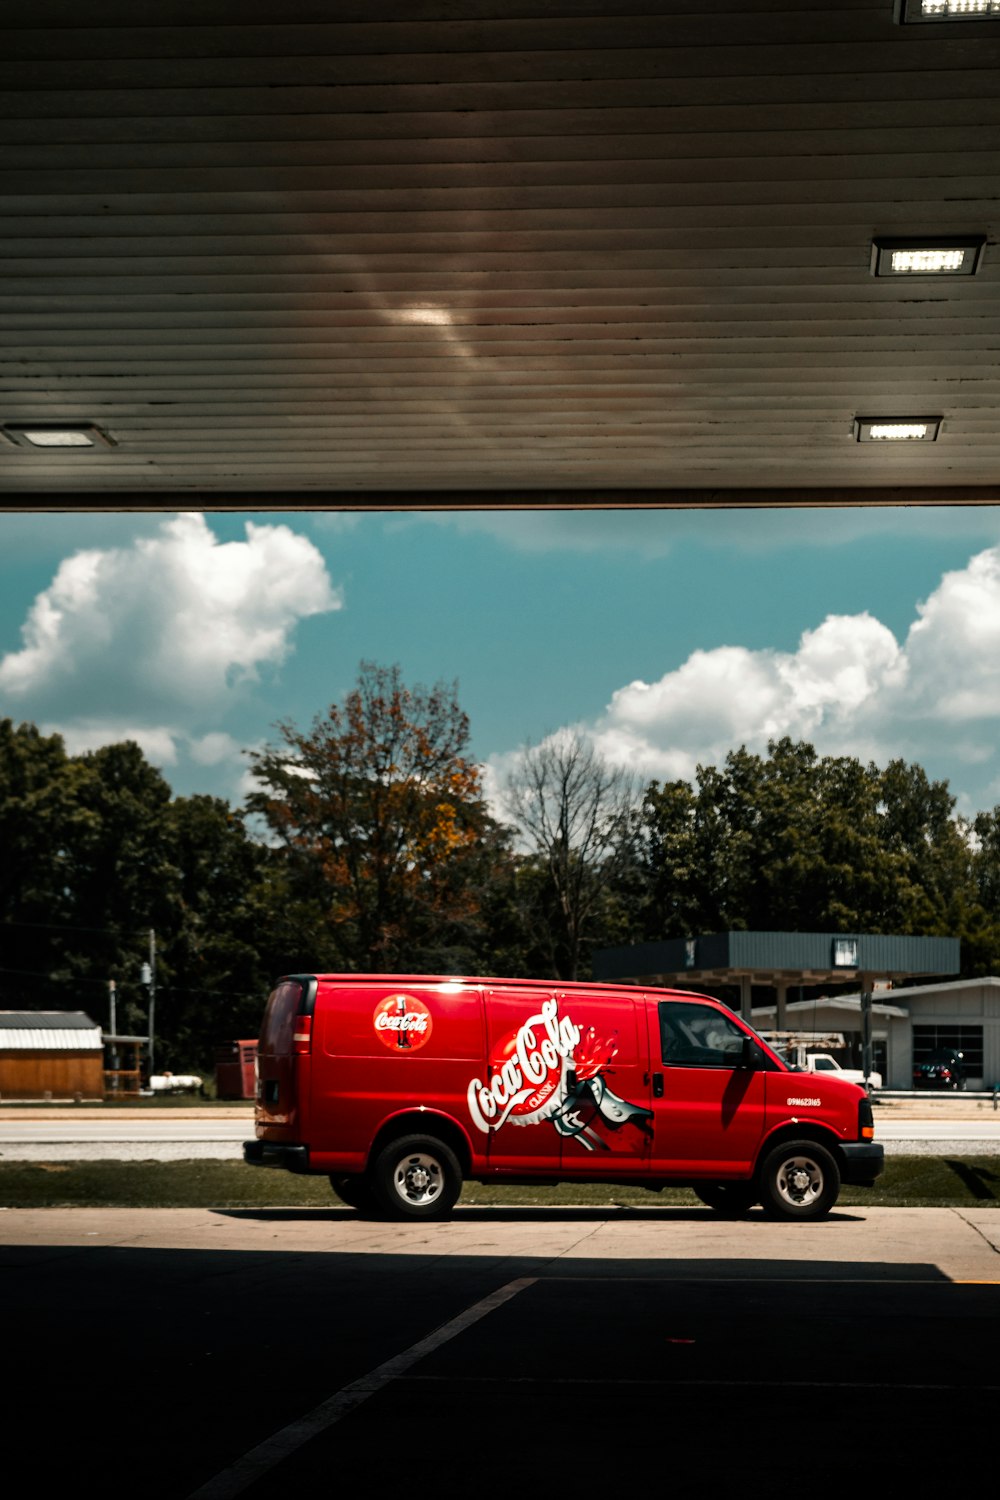 red van parked on parking lot during daytime